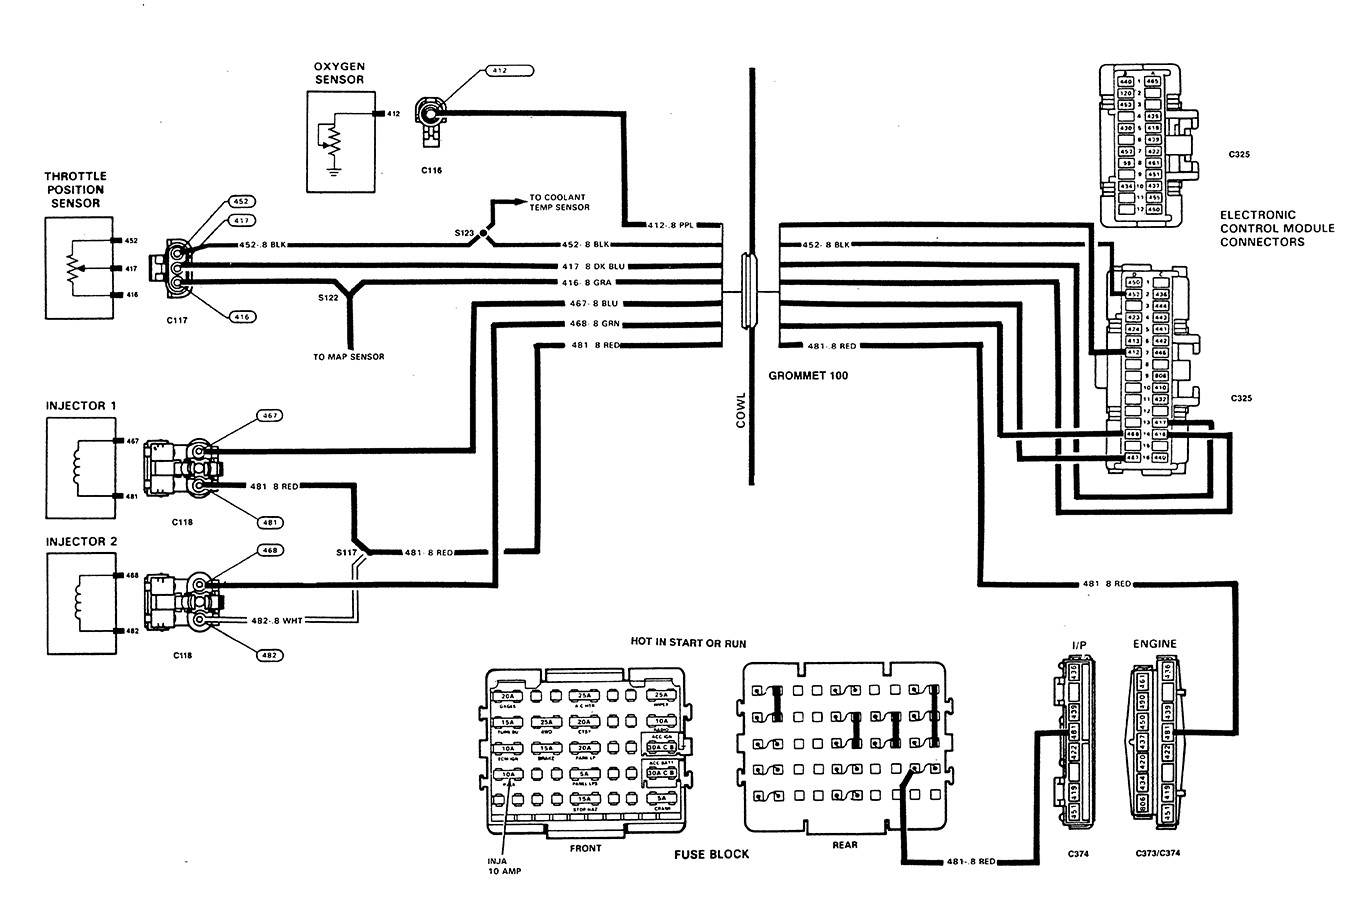 Bosch Oxygen Sensor Wire Diagram | Wiring Library - 4 Wire O2 Sensor Wiring Diagram